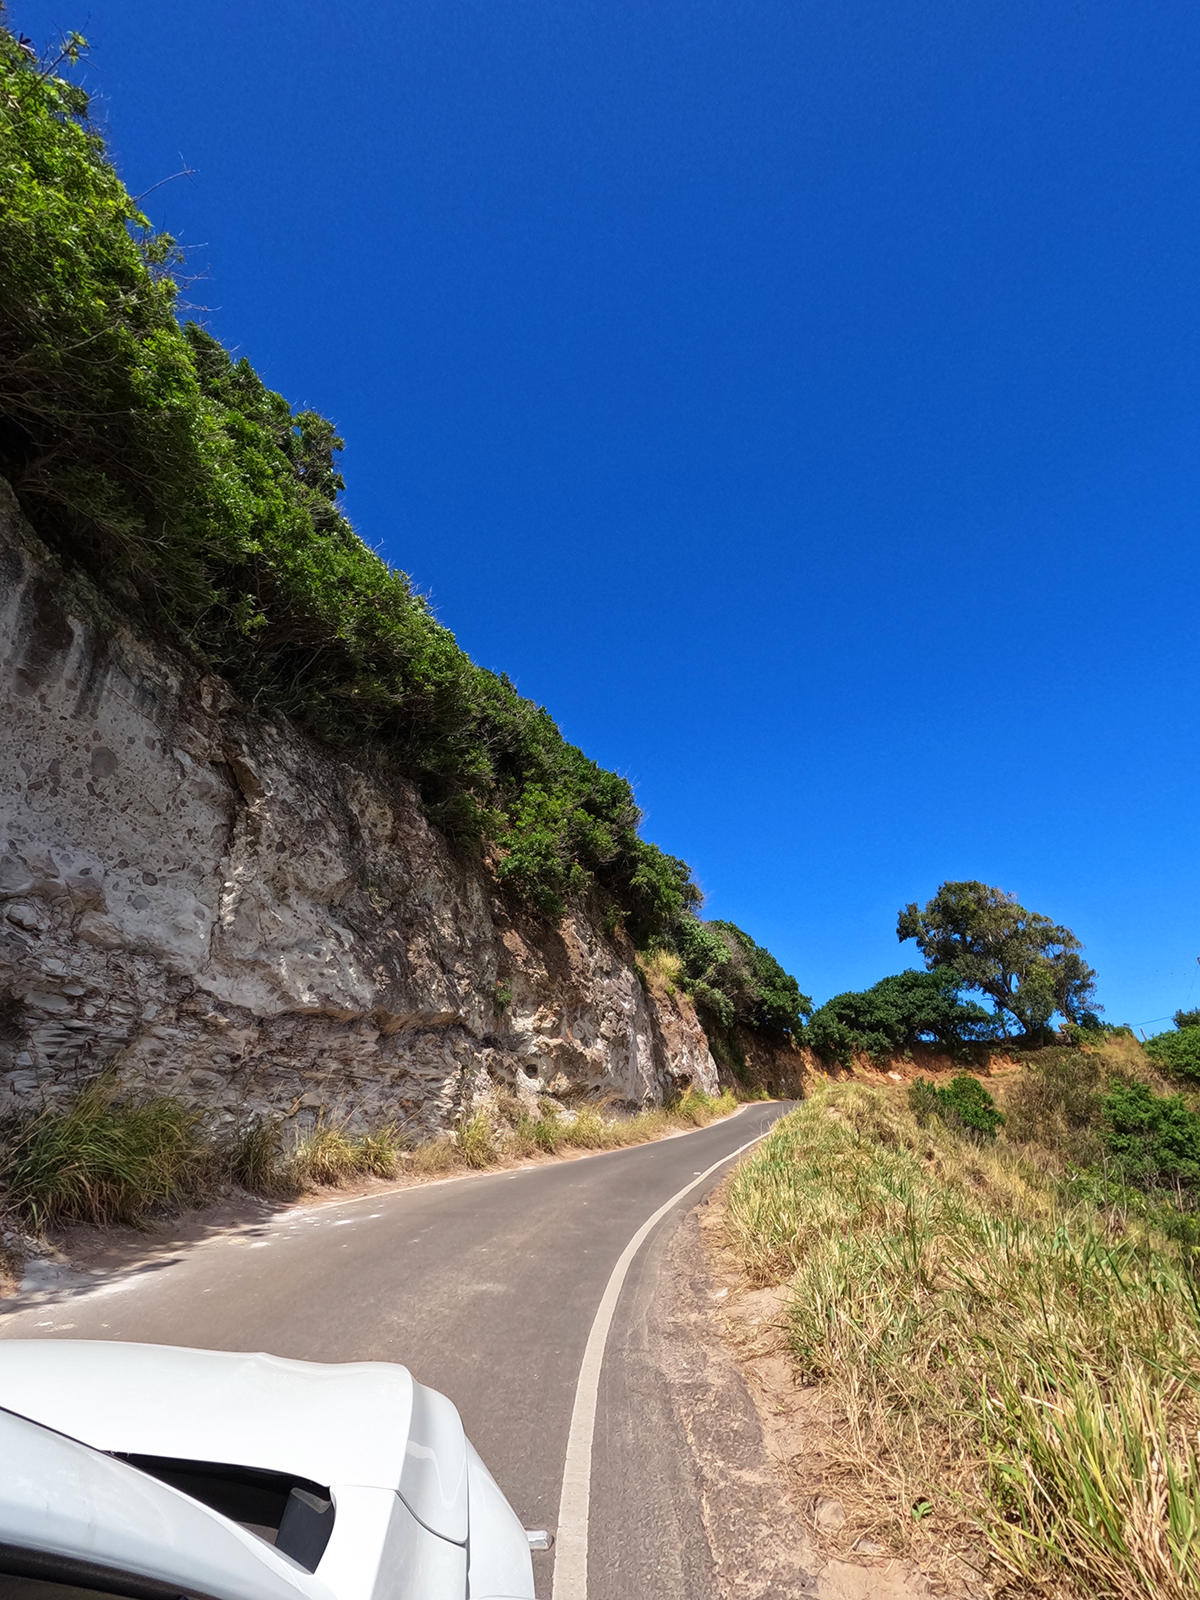 car on narrow road beside rocky cliff